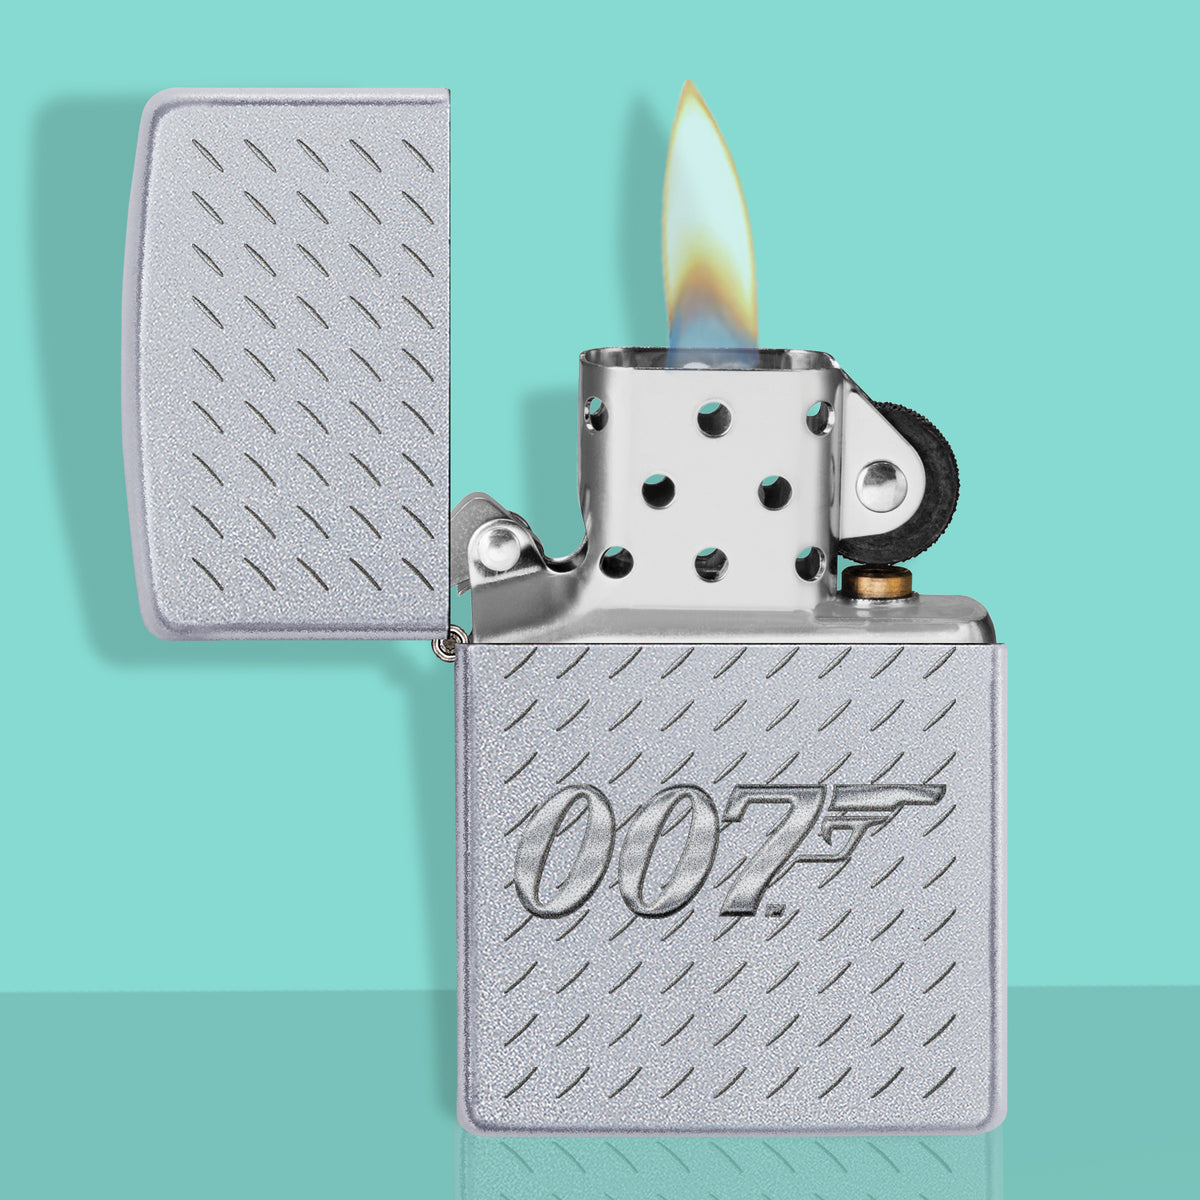 James Bond Zippo Lighter - Textured Chrome Edition